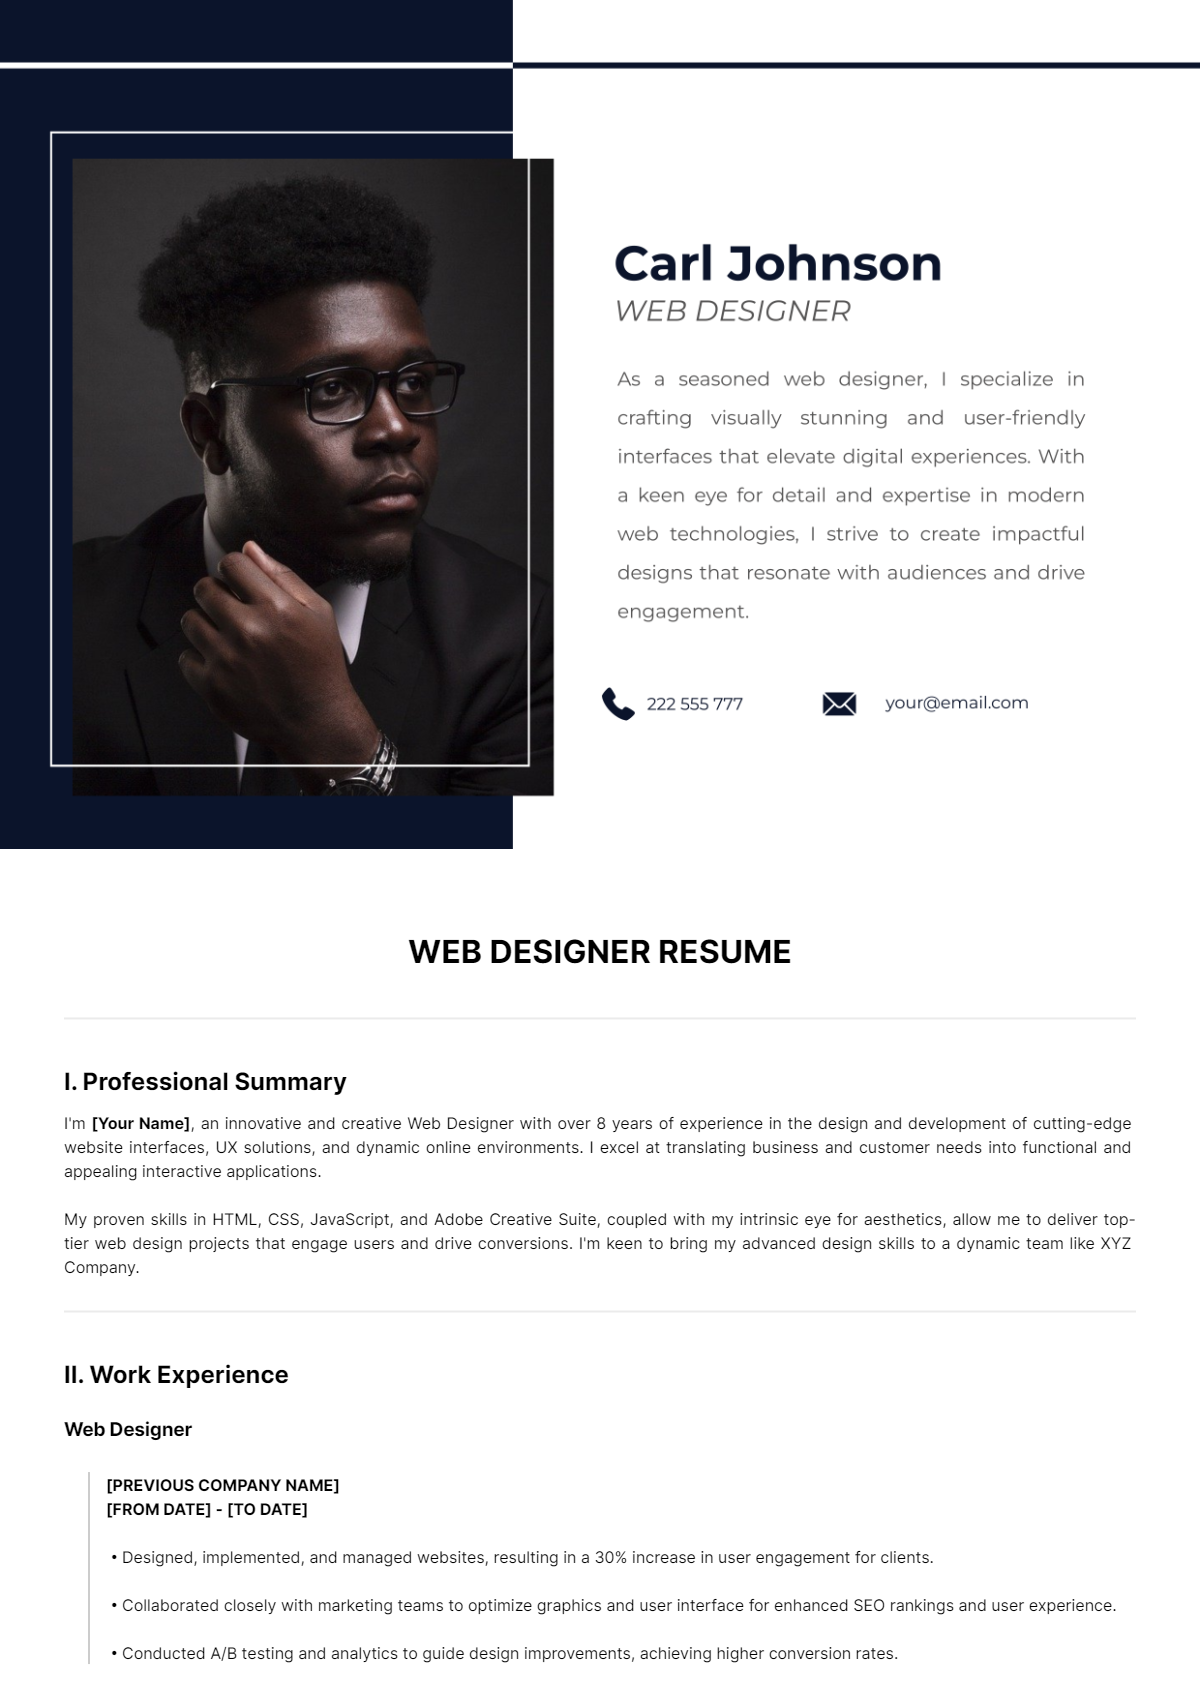 Web Designer Resume Template